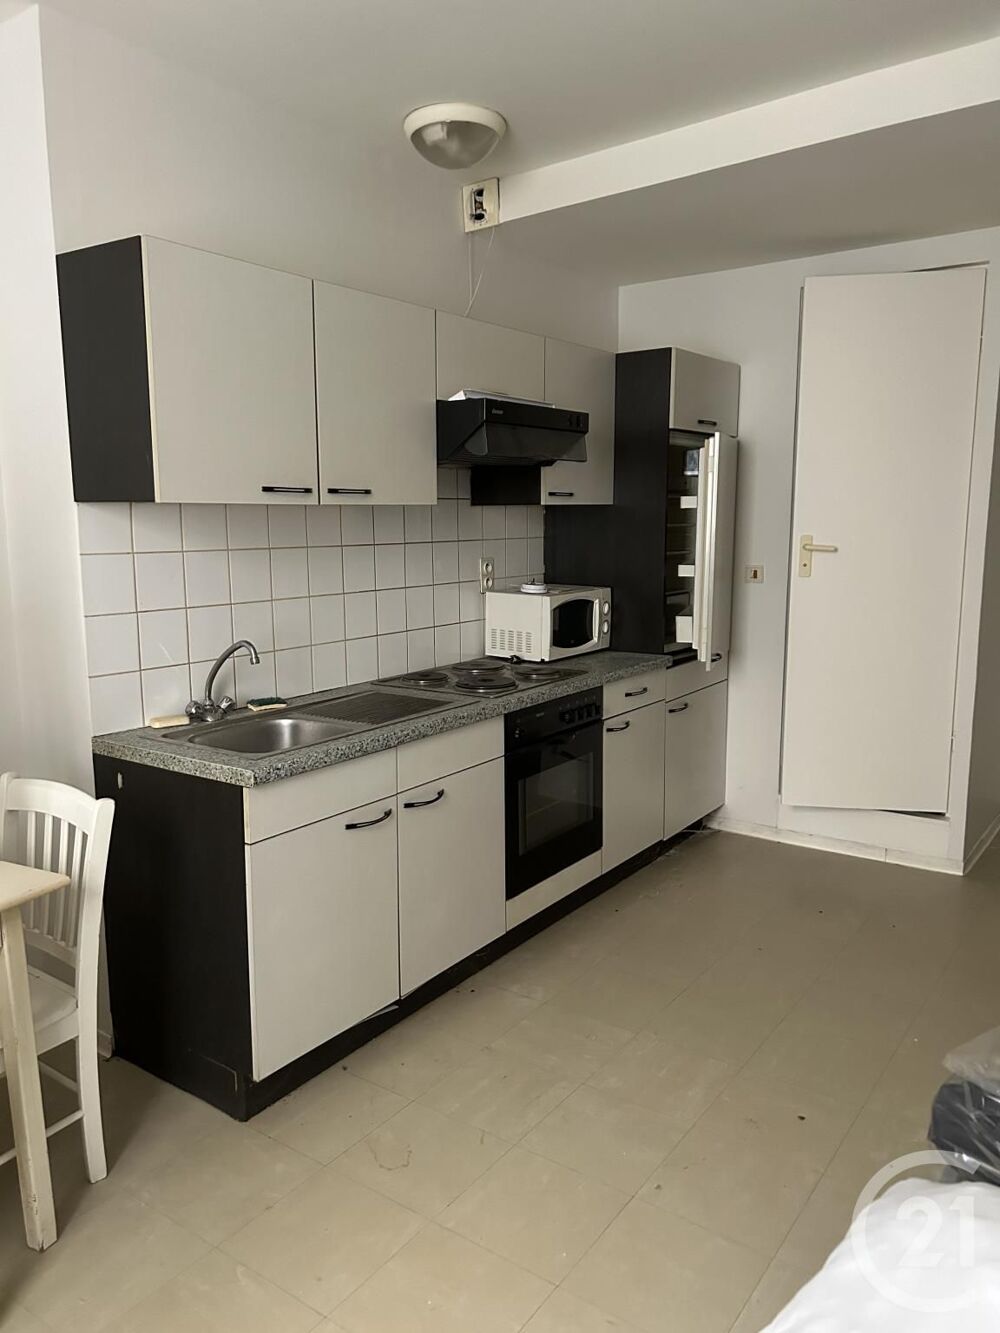 location Appartement - 1 pice(s) - 20 m Castres (81100)